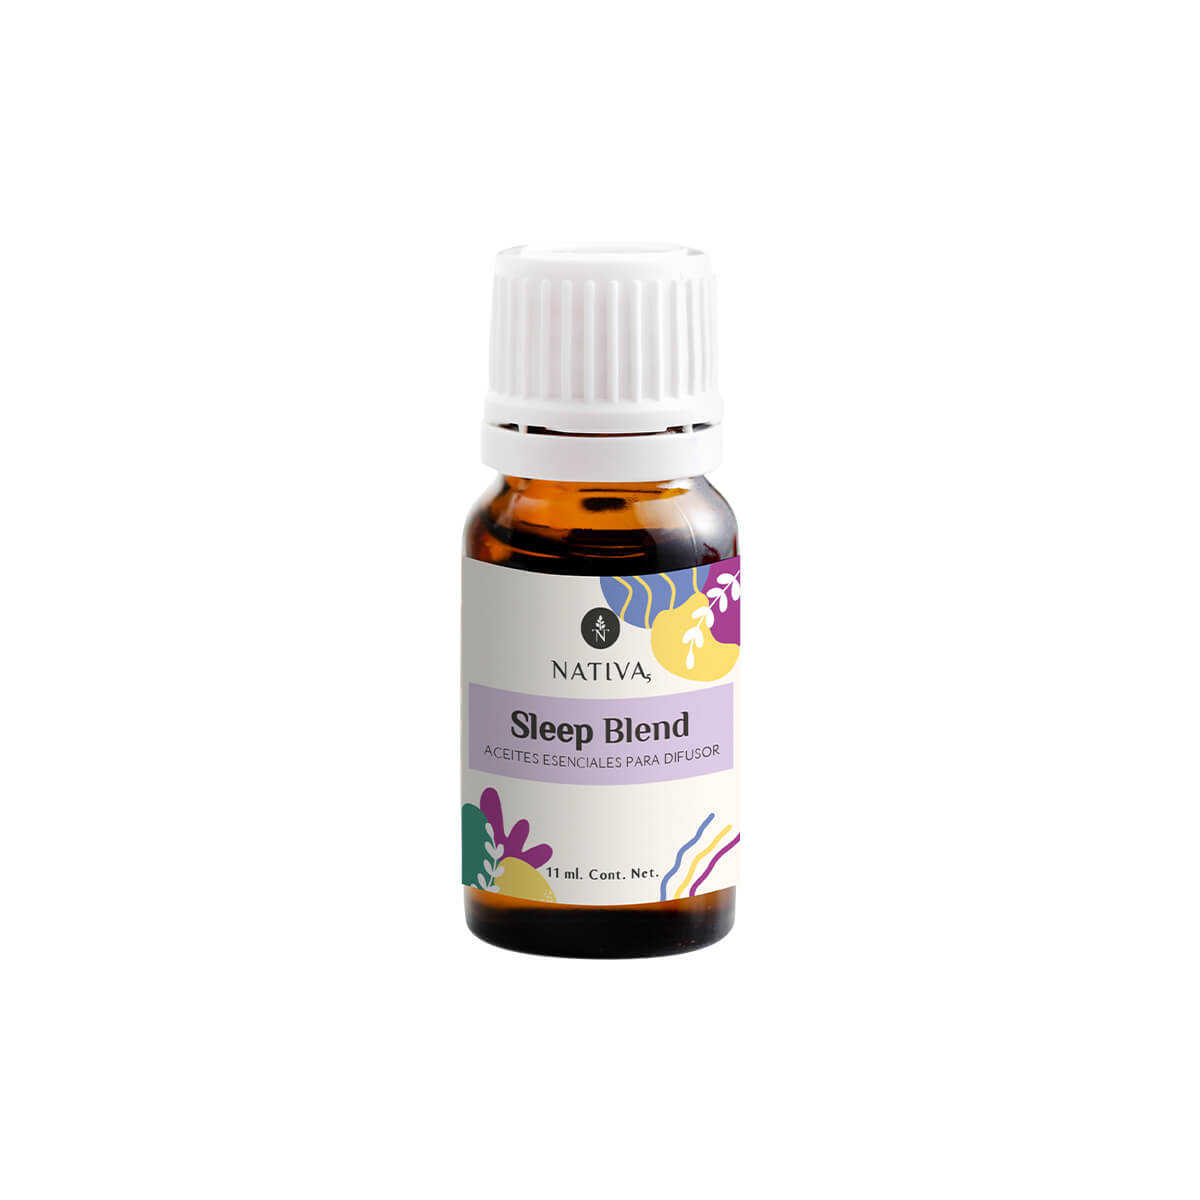 Sleep Blend - Difusor 11 ml. Nativa5